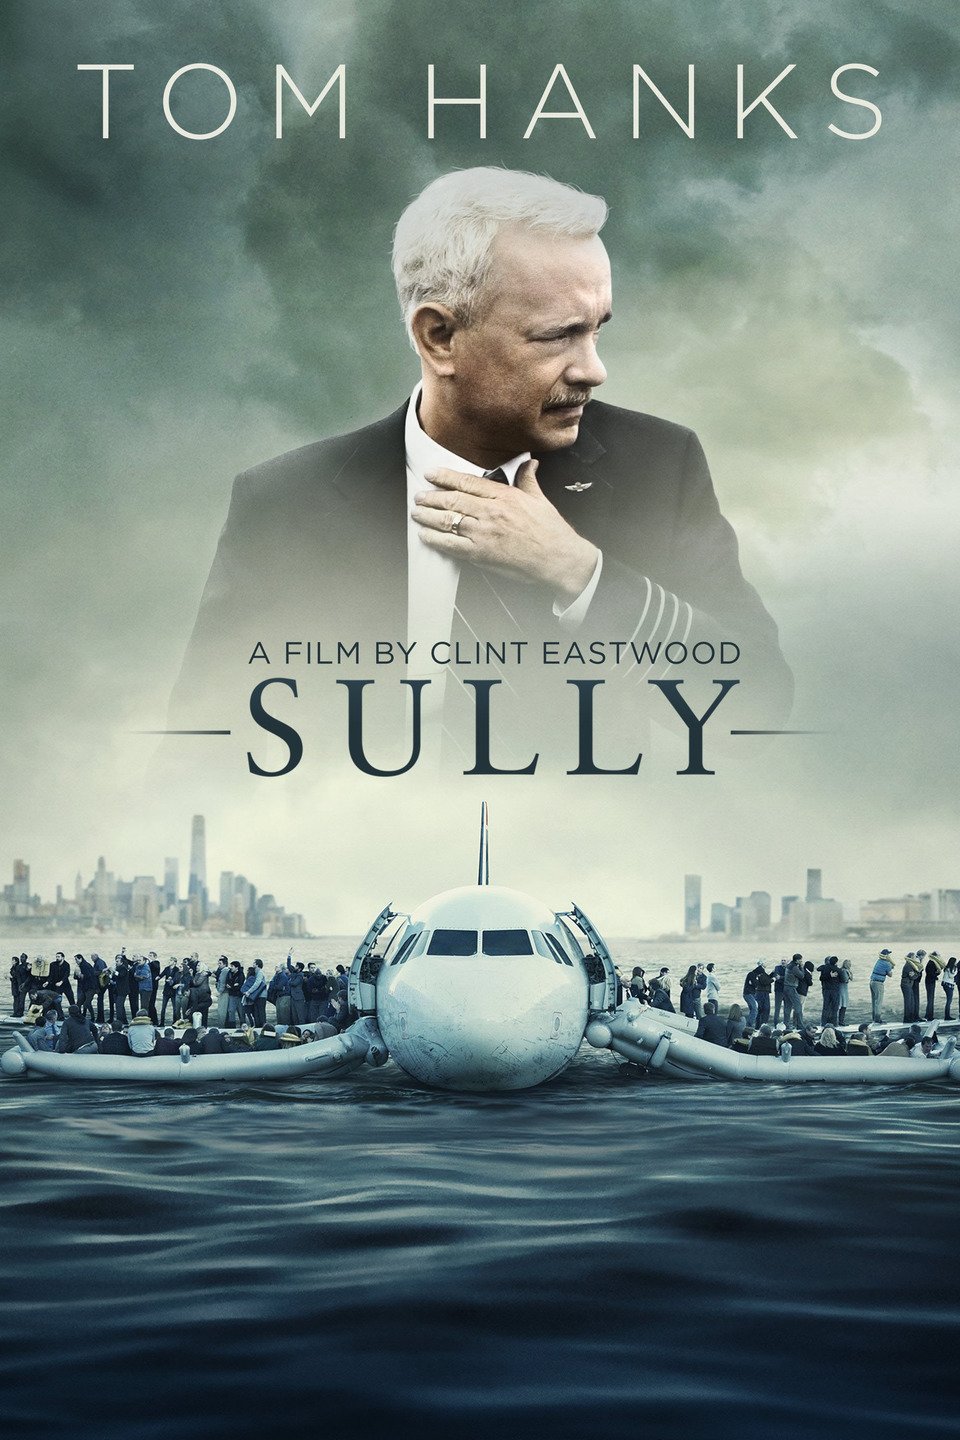 [MINI Super-HQ] Sully (2016) ซัลลี่ ปาฎิหาริย์ที่แม่น้ำฮัดสัน [1080p] [พากย์ไทย 5.1 + เสียงอังกฤษ DTS] [บรรยายไทย + อังกฤษ] [เสียงไทย + ซับไทย] [OPENLOAD]